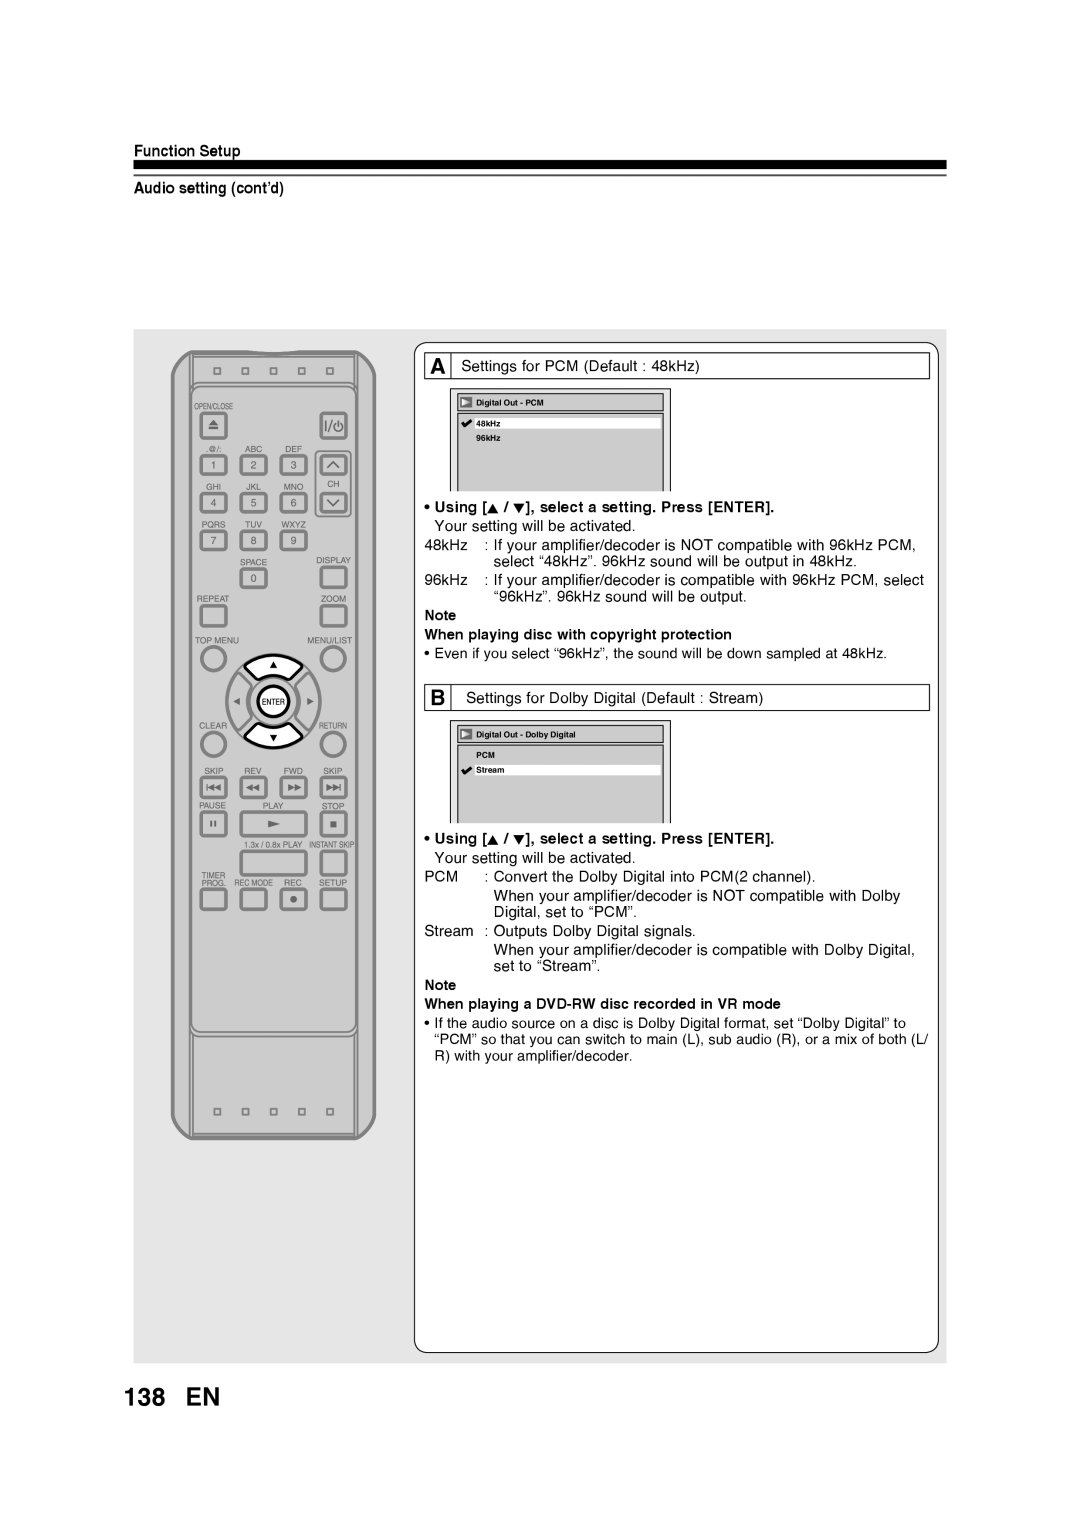 Toshiba D-RW2SU/D-RW2SC manual 138 EN, Function Setup Audio setting cont’d, Using K / L, select a setting. Press ENTER 